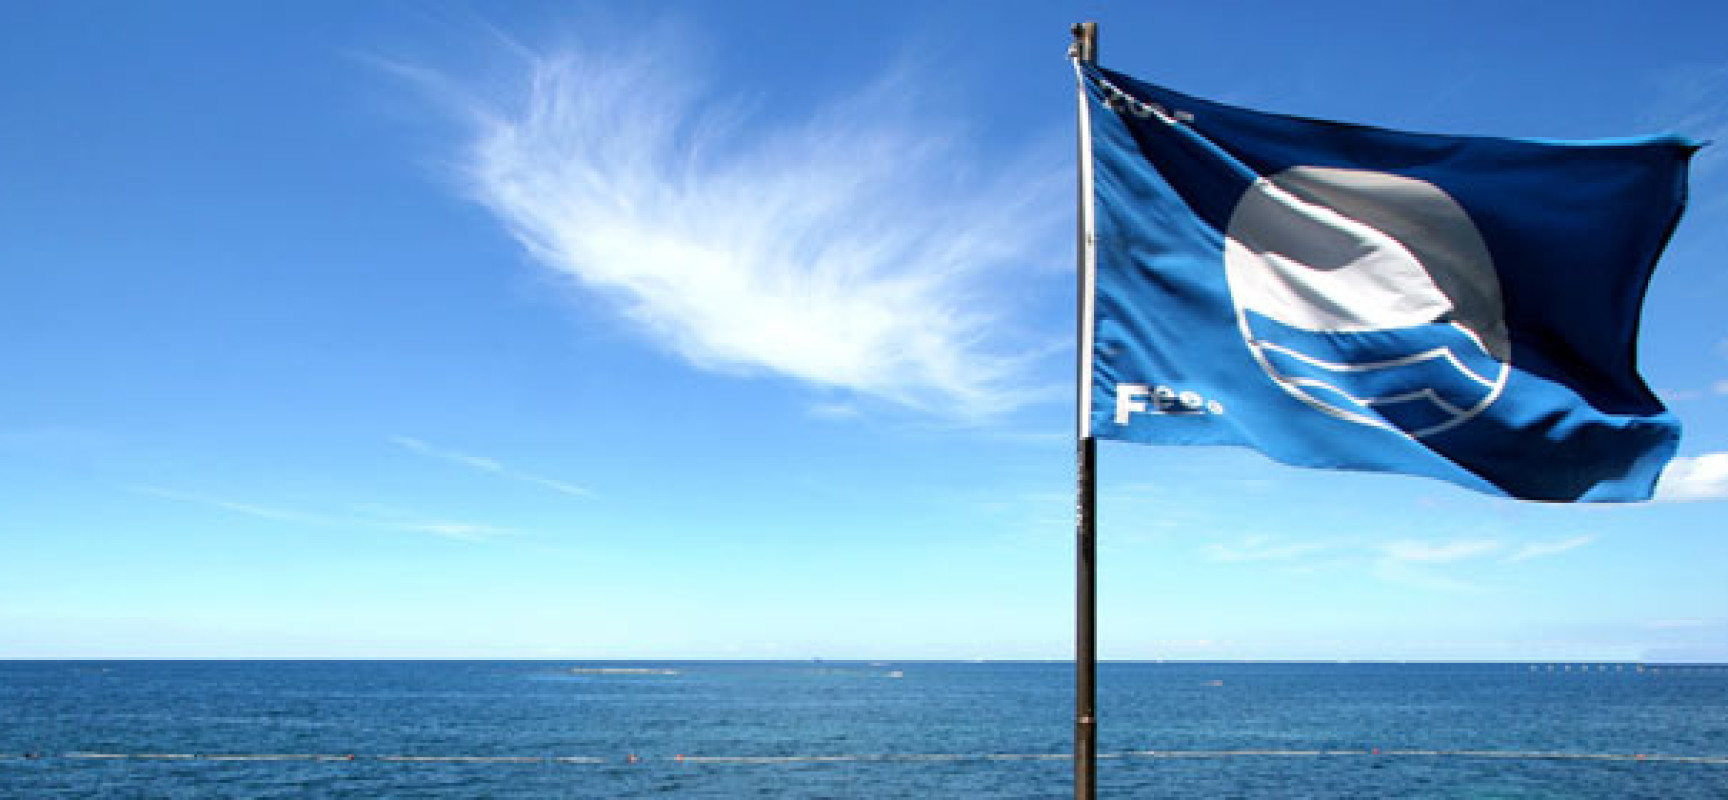 На борту холера бело синий флаг. Голубой флаг. Синий флаг. Пляжи с голубым флагом в России. Пляжи Турции с голубым флагом.